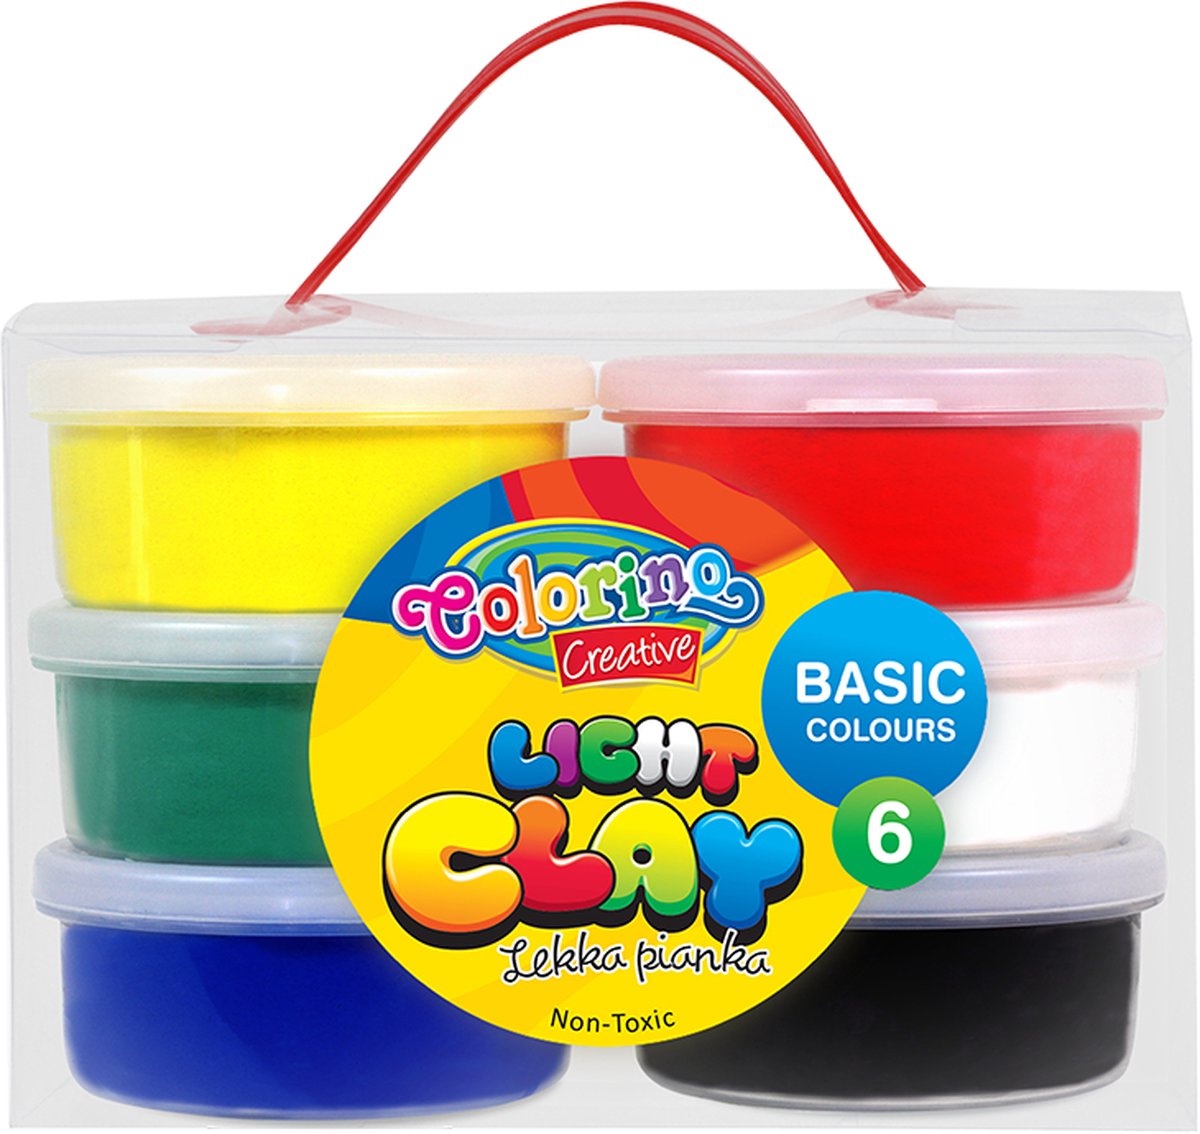 Colorino-plasticine klei-zachte klei-6 kleuren.